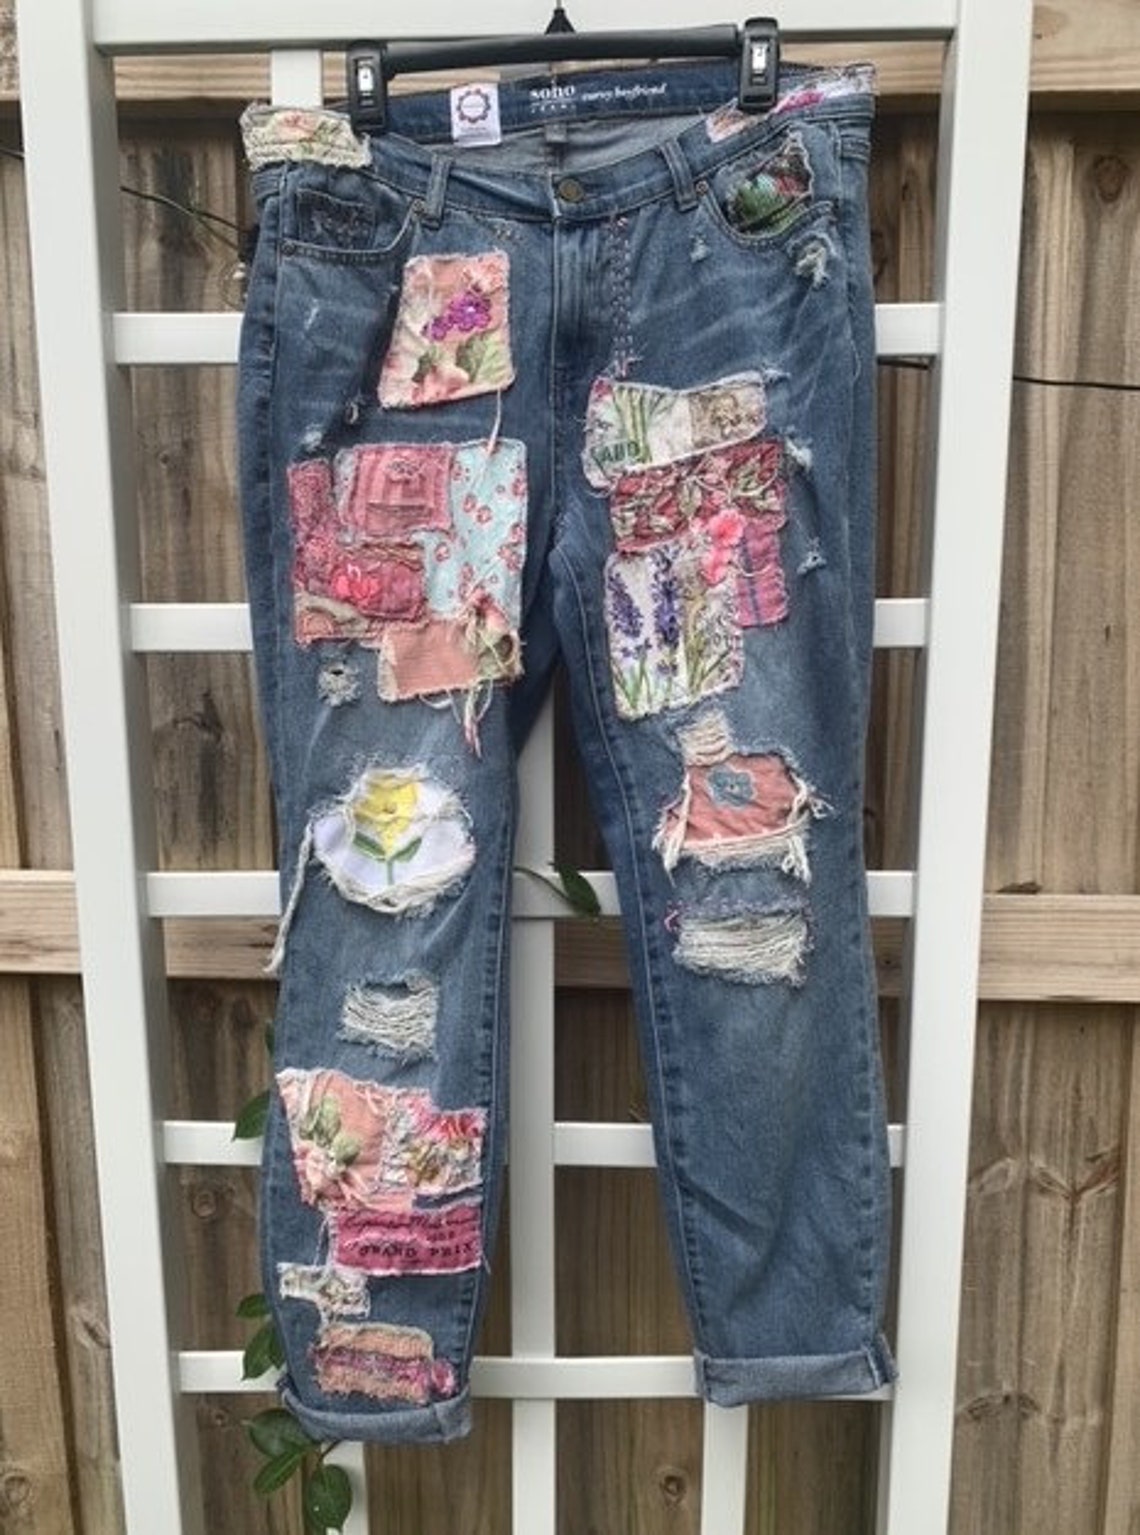 Patchwork star jeans grunge tattered distressed denim jeans | Etsy